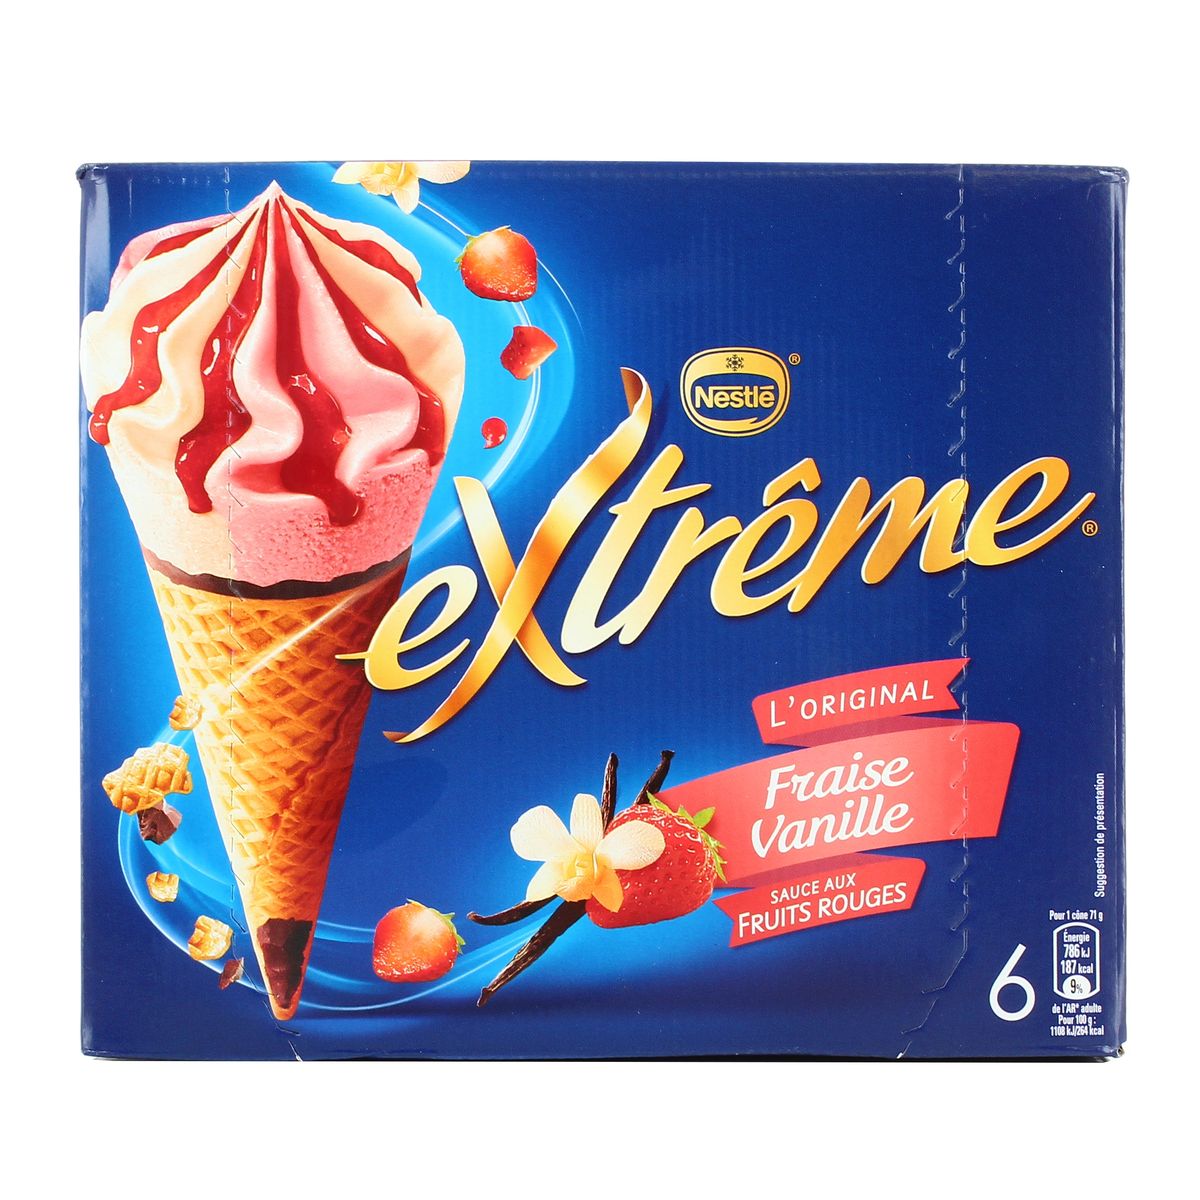 Nestlé Ice Cream Vanilla And Strawberry x 6 